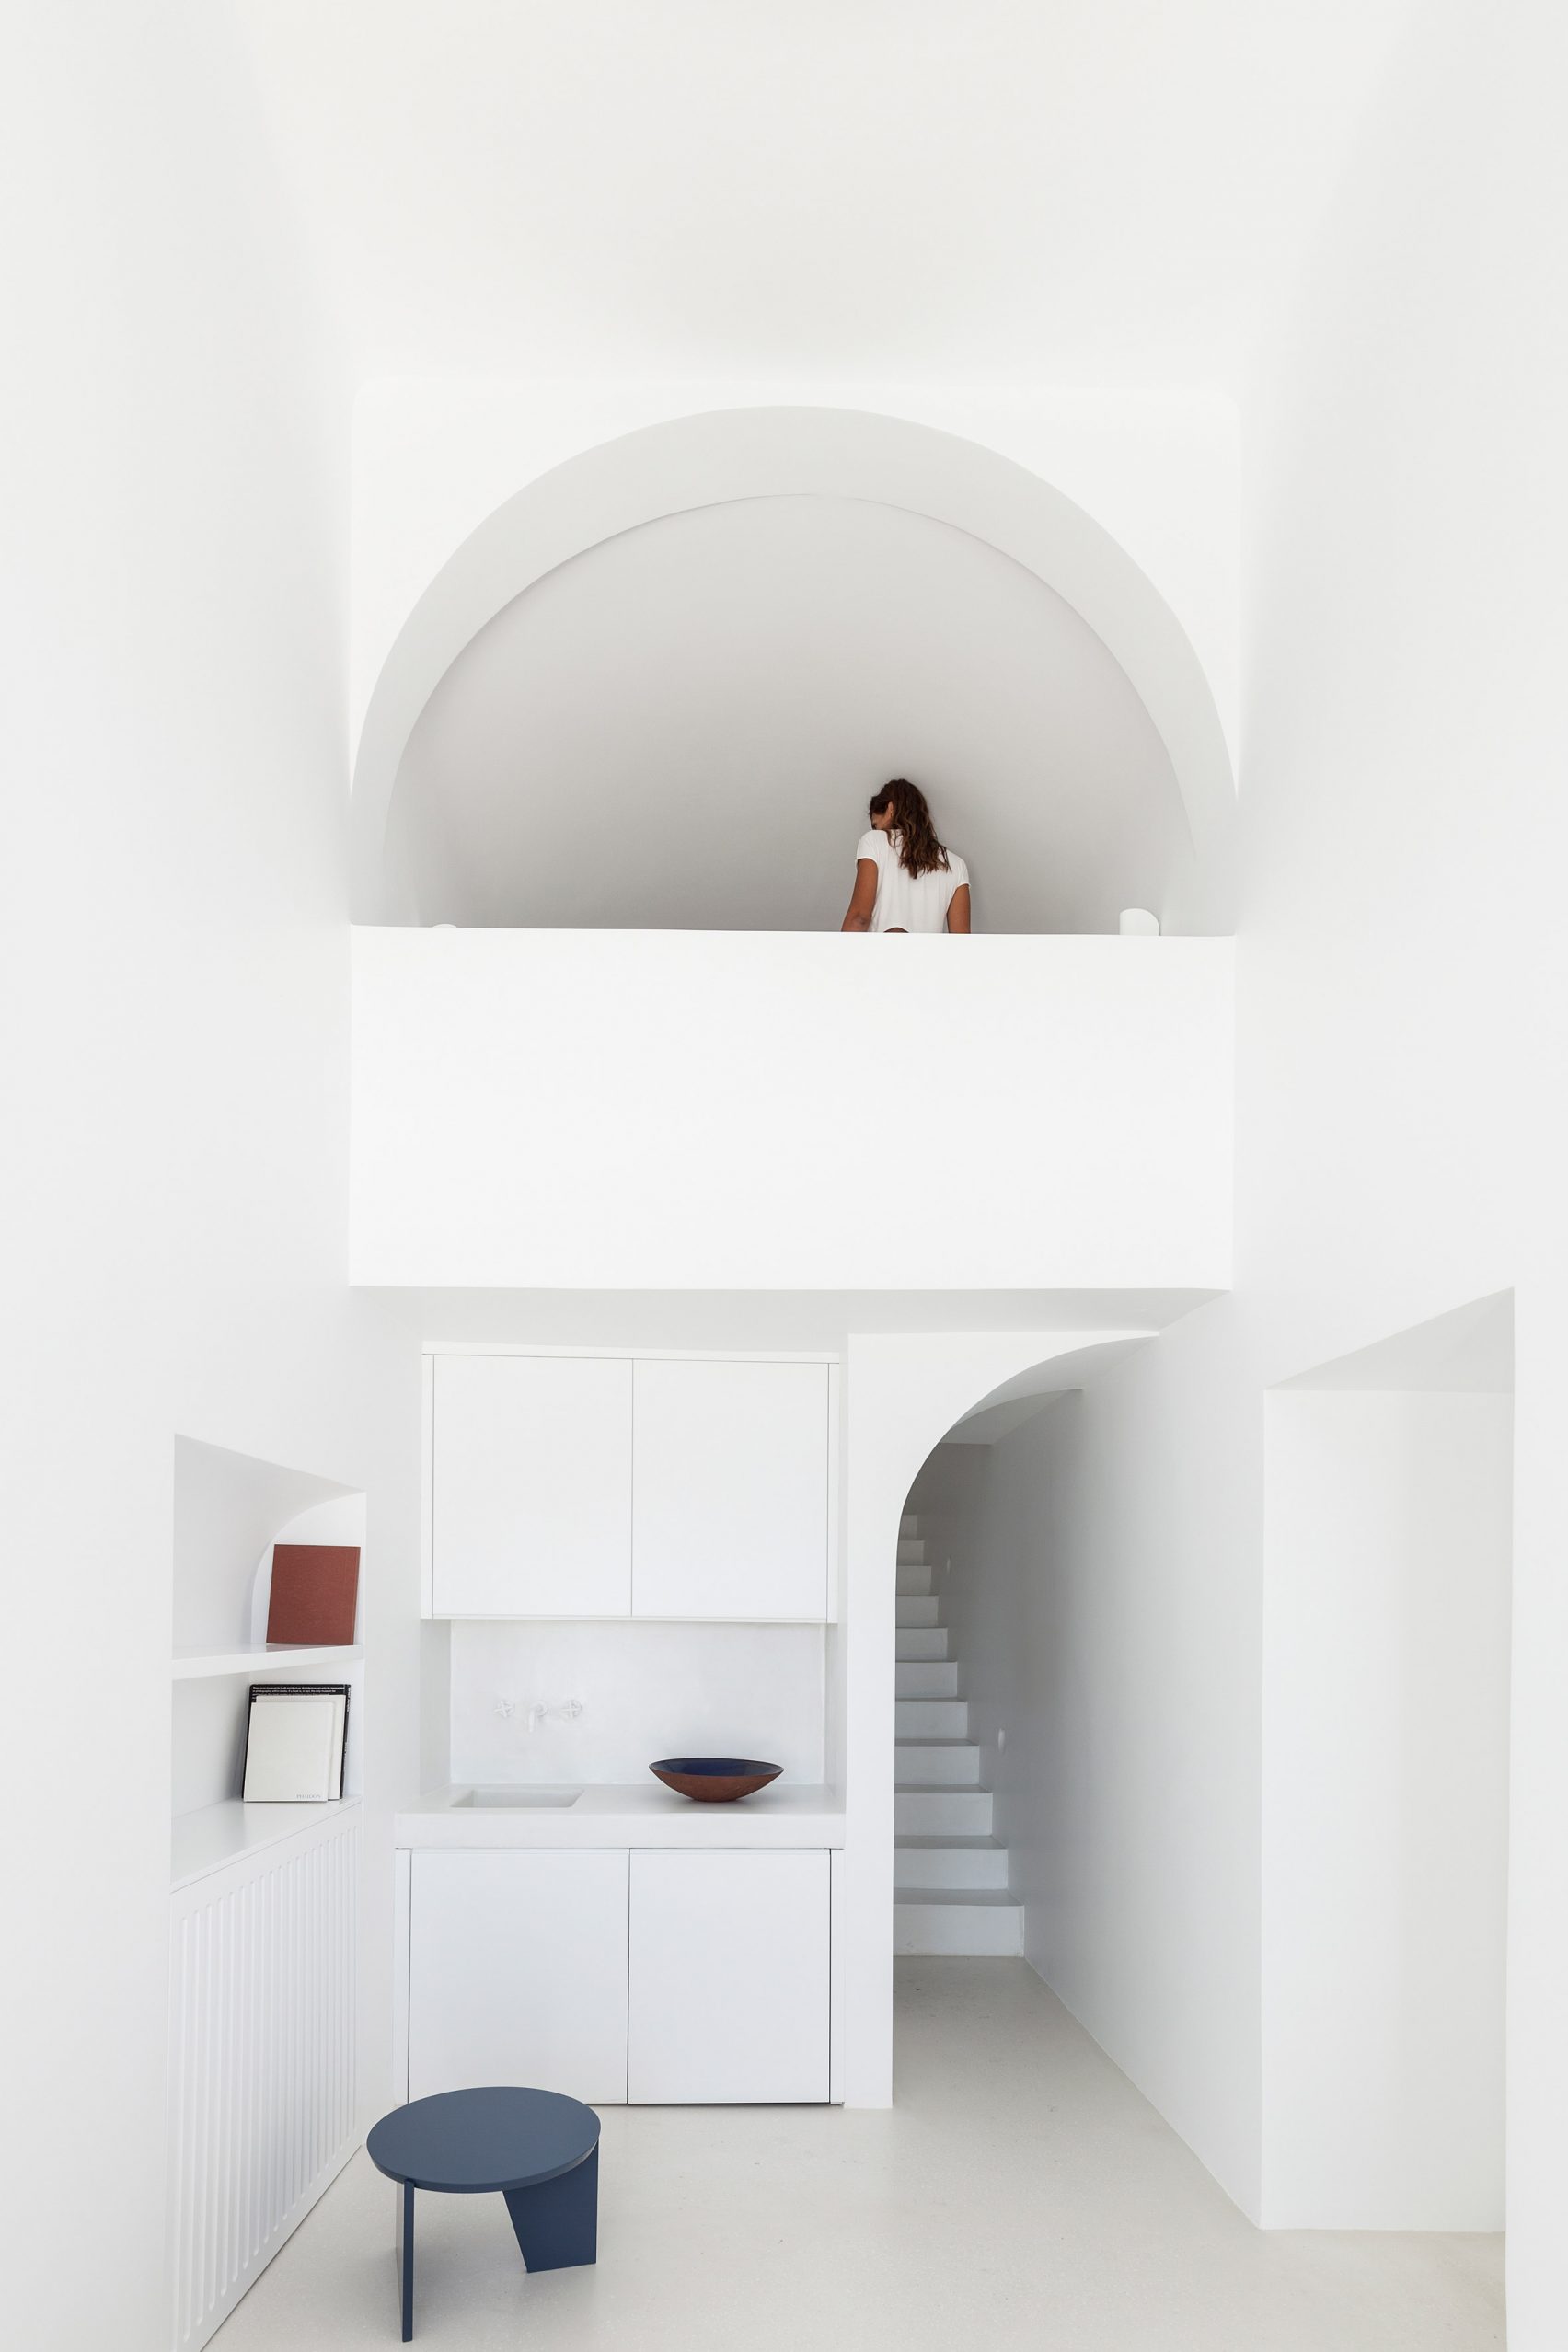 summer-residence-santorini-kapsimalis-architects-greece-architecture_dezeen_2364_col_19-1704x2556